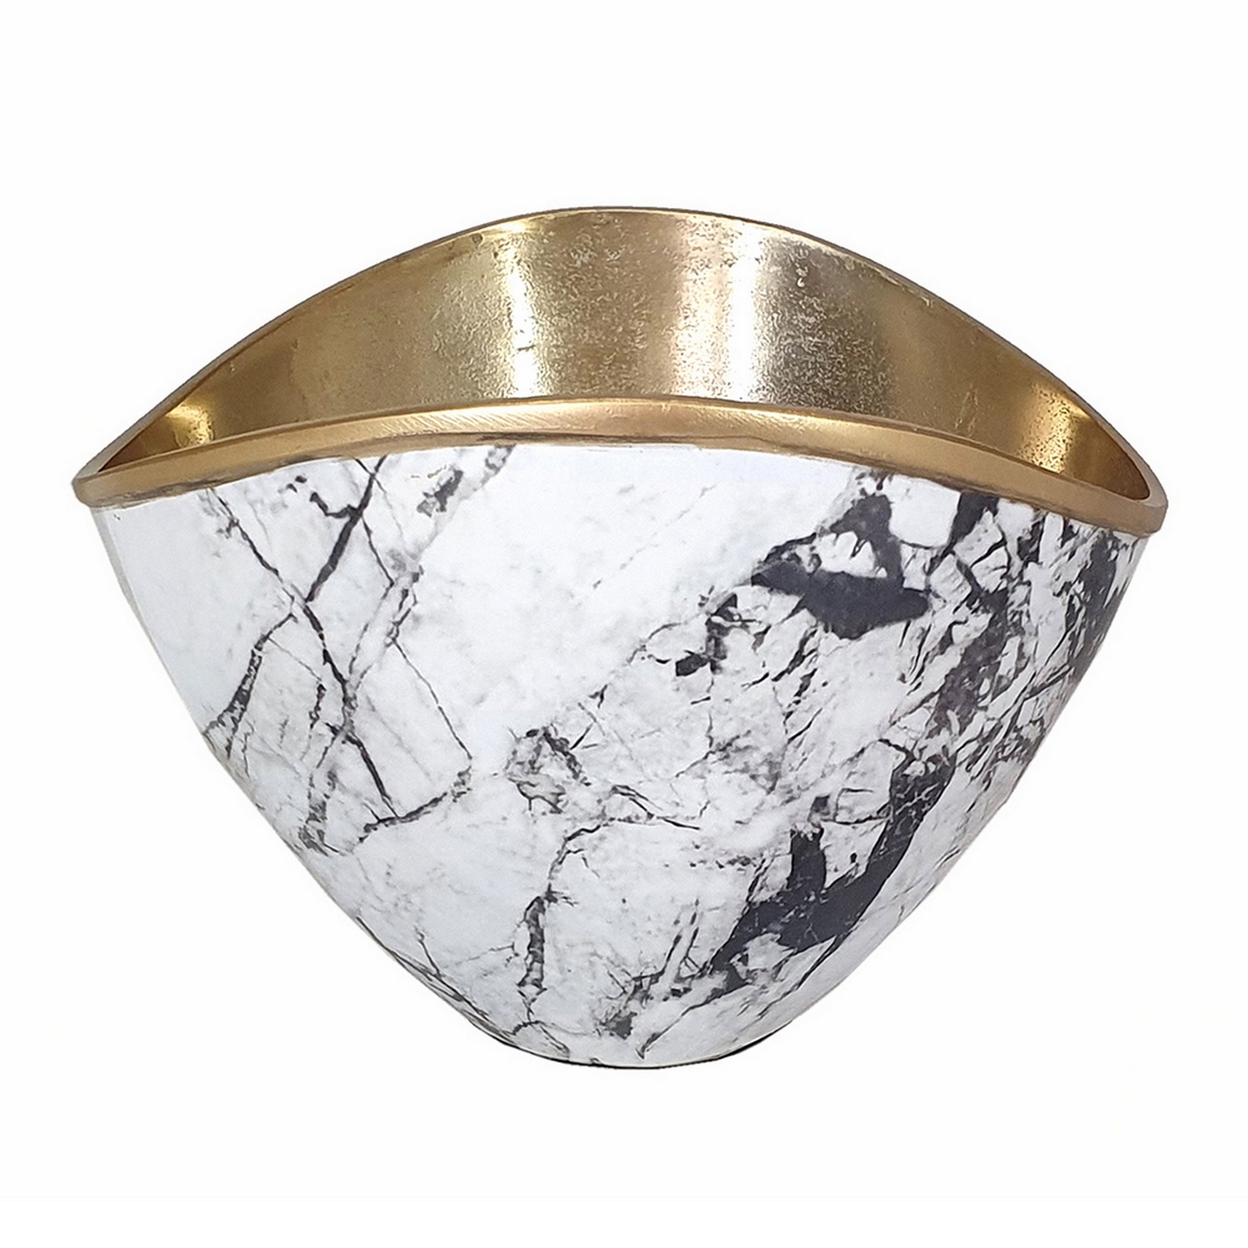 Sinzo 10 Inch Curved Bowl, Gold Aluminum, Textured Design, Black, White - Saltoro Sherpi